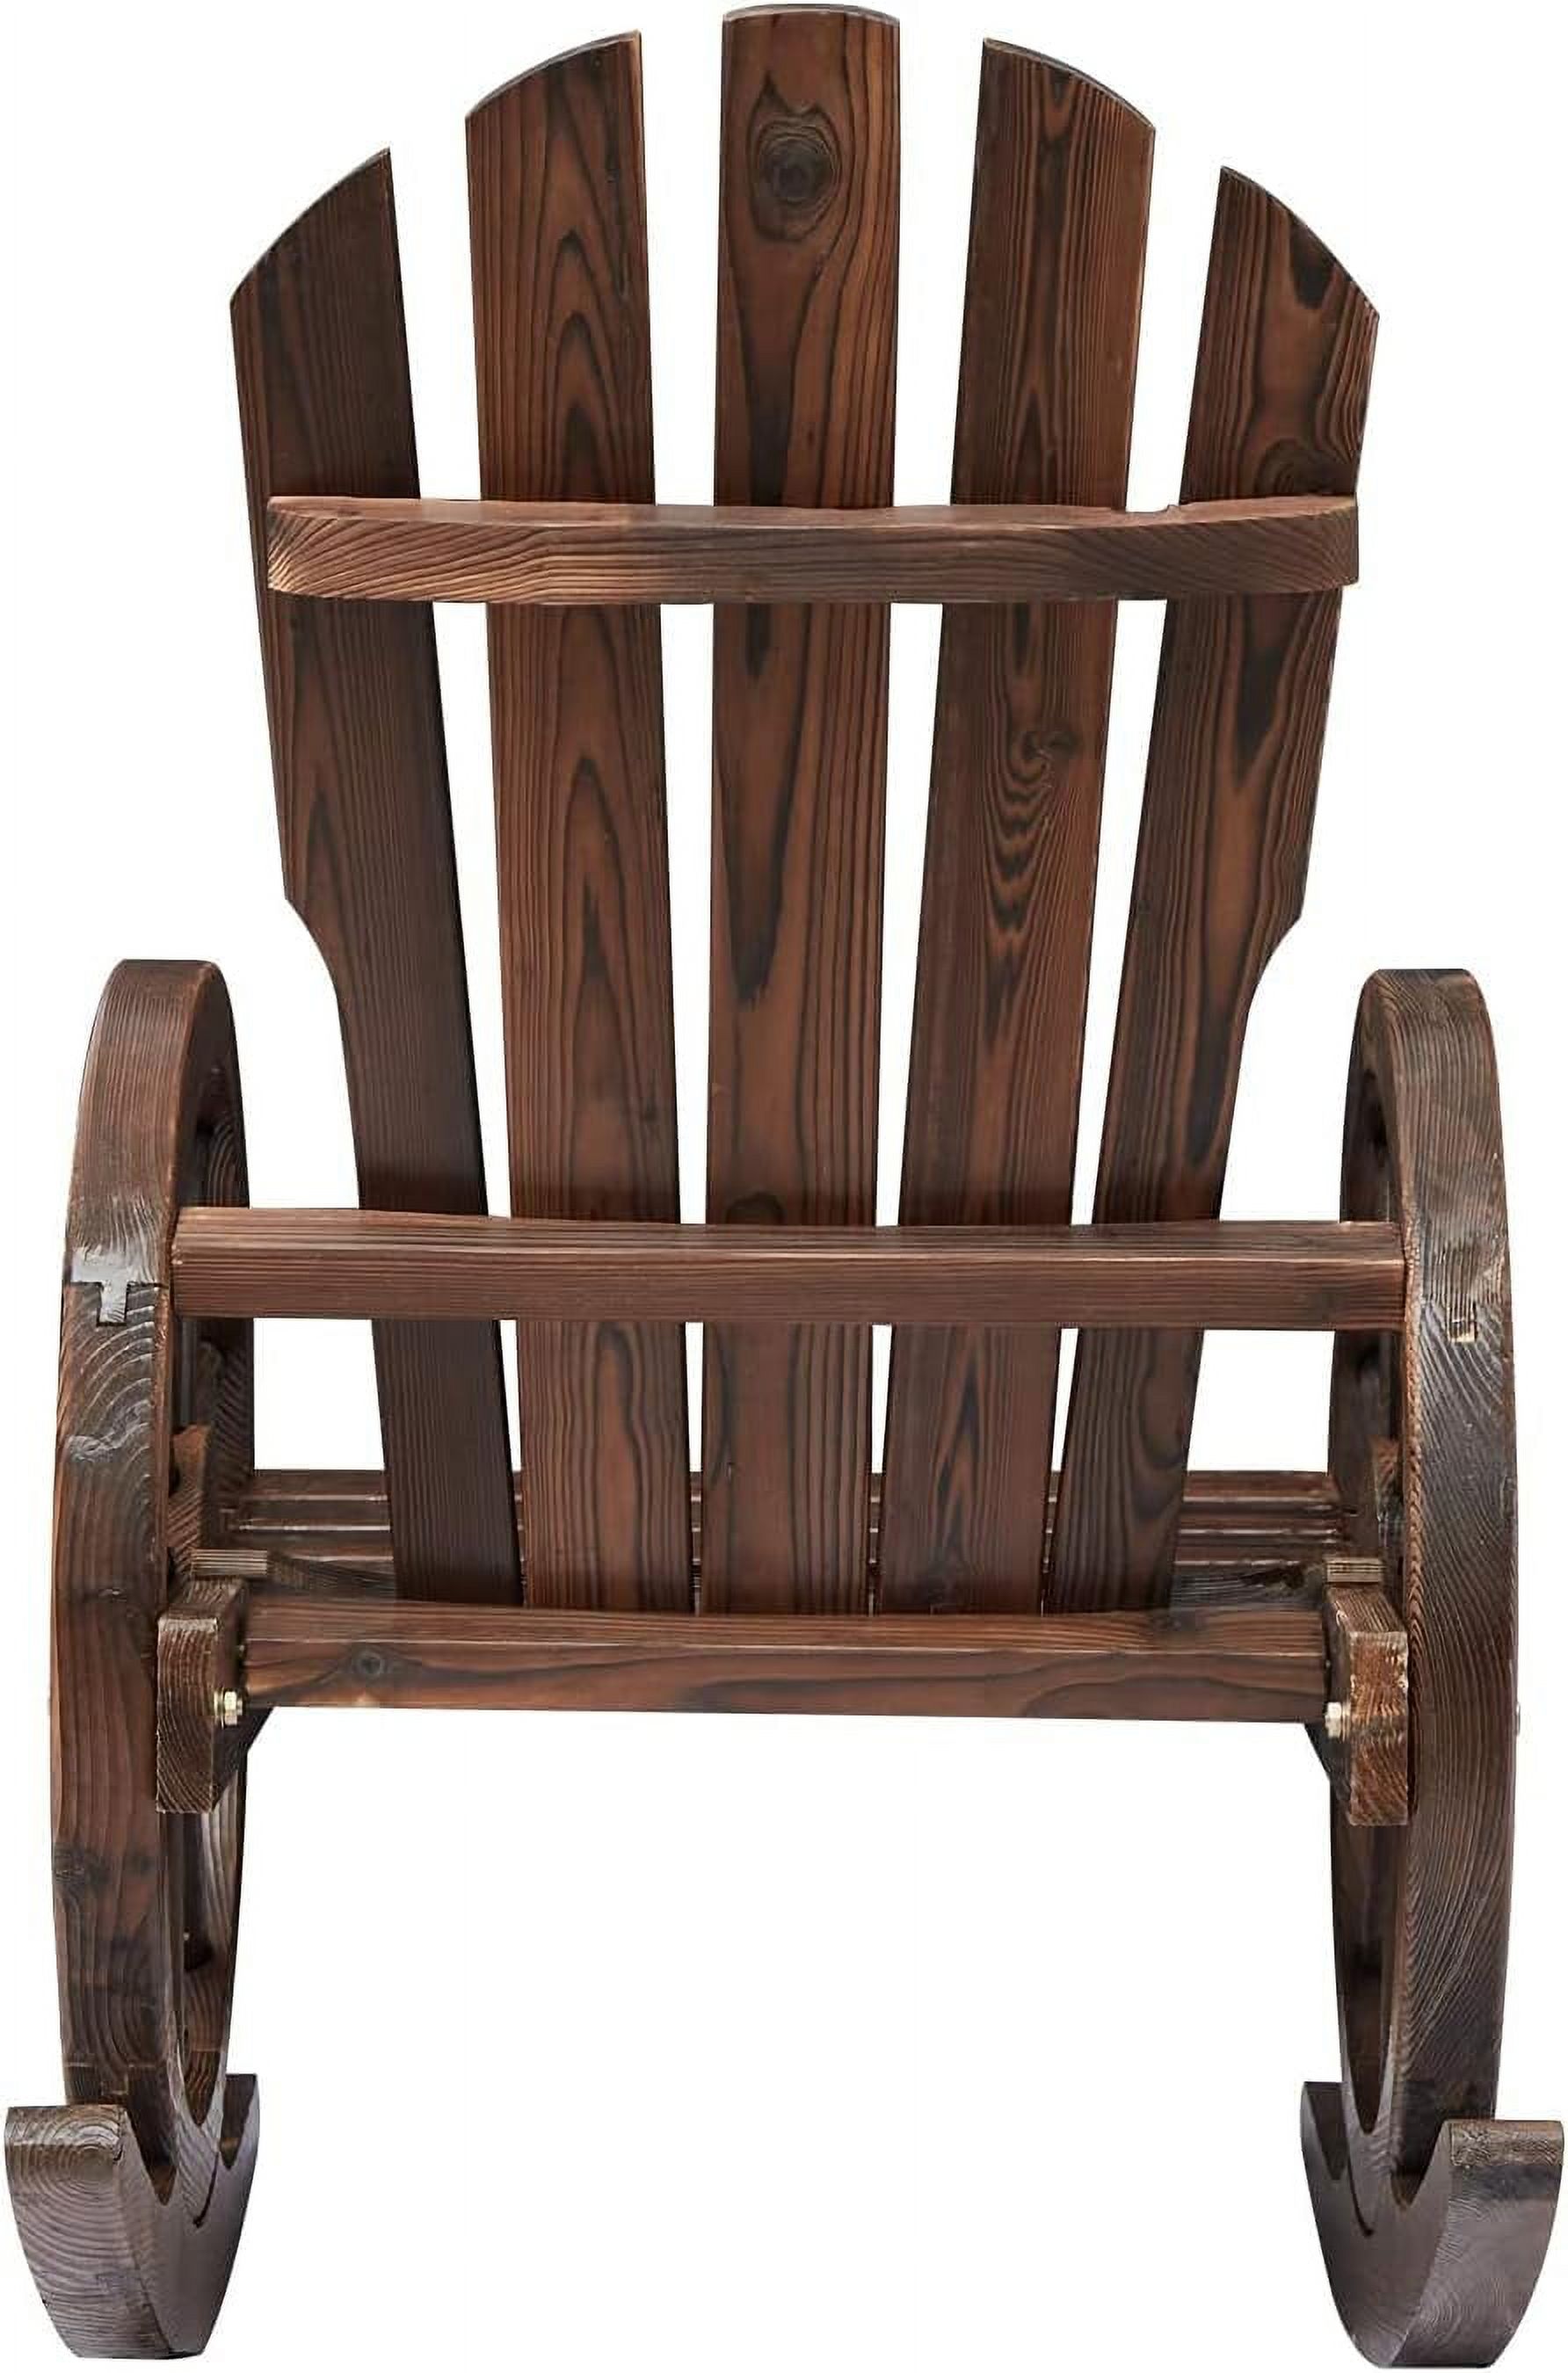 Kinbor Wagon Wheel Wood Rocking Chair Outdoor Furniture Patio Chairs Armrest Rocker - image 4 of 7